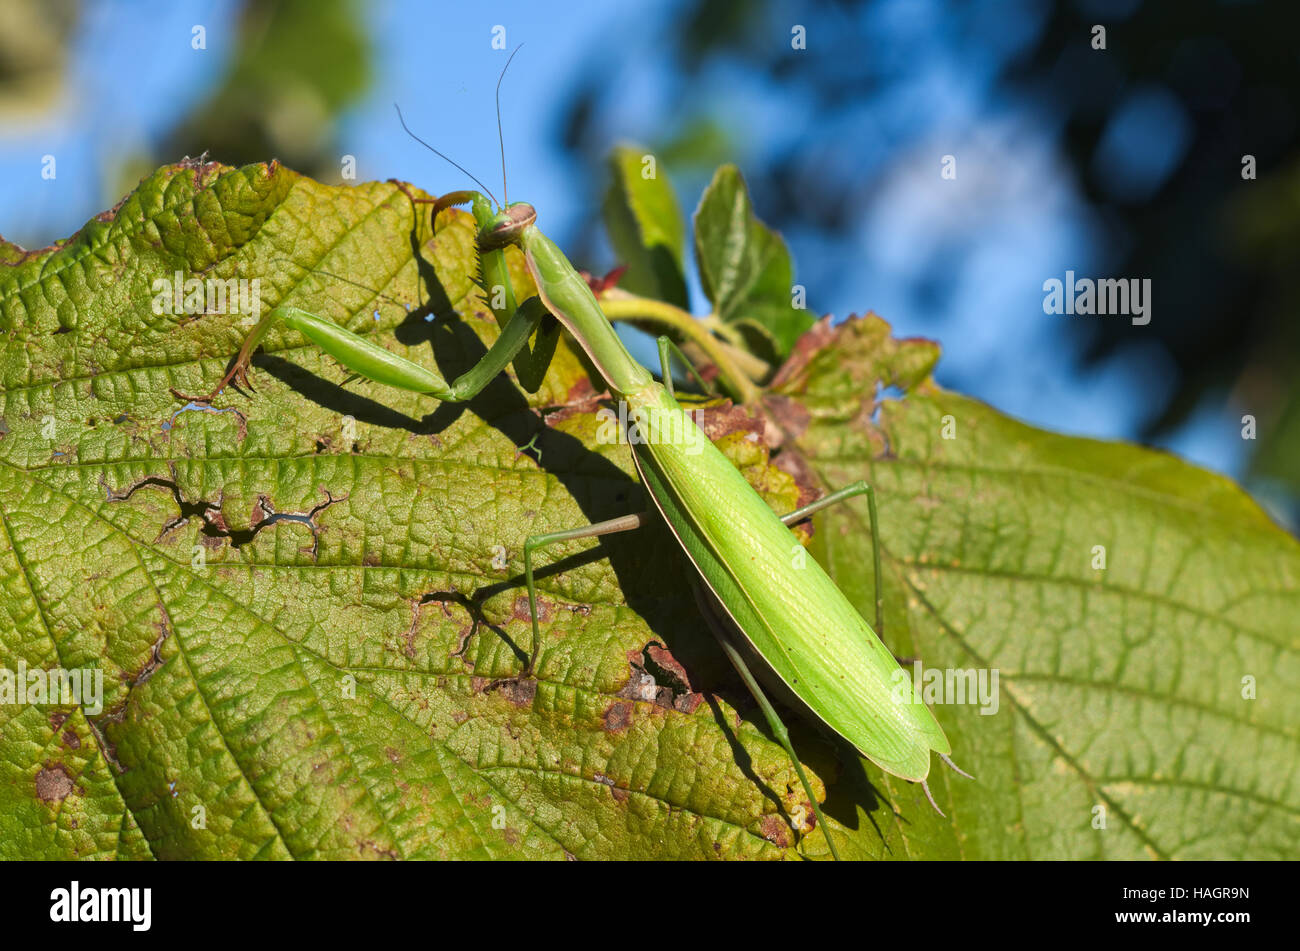 European or praying mantis (Mantis religiosa) hunting in an Italian garden Stock Photo